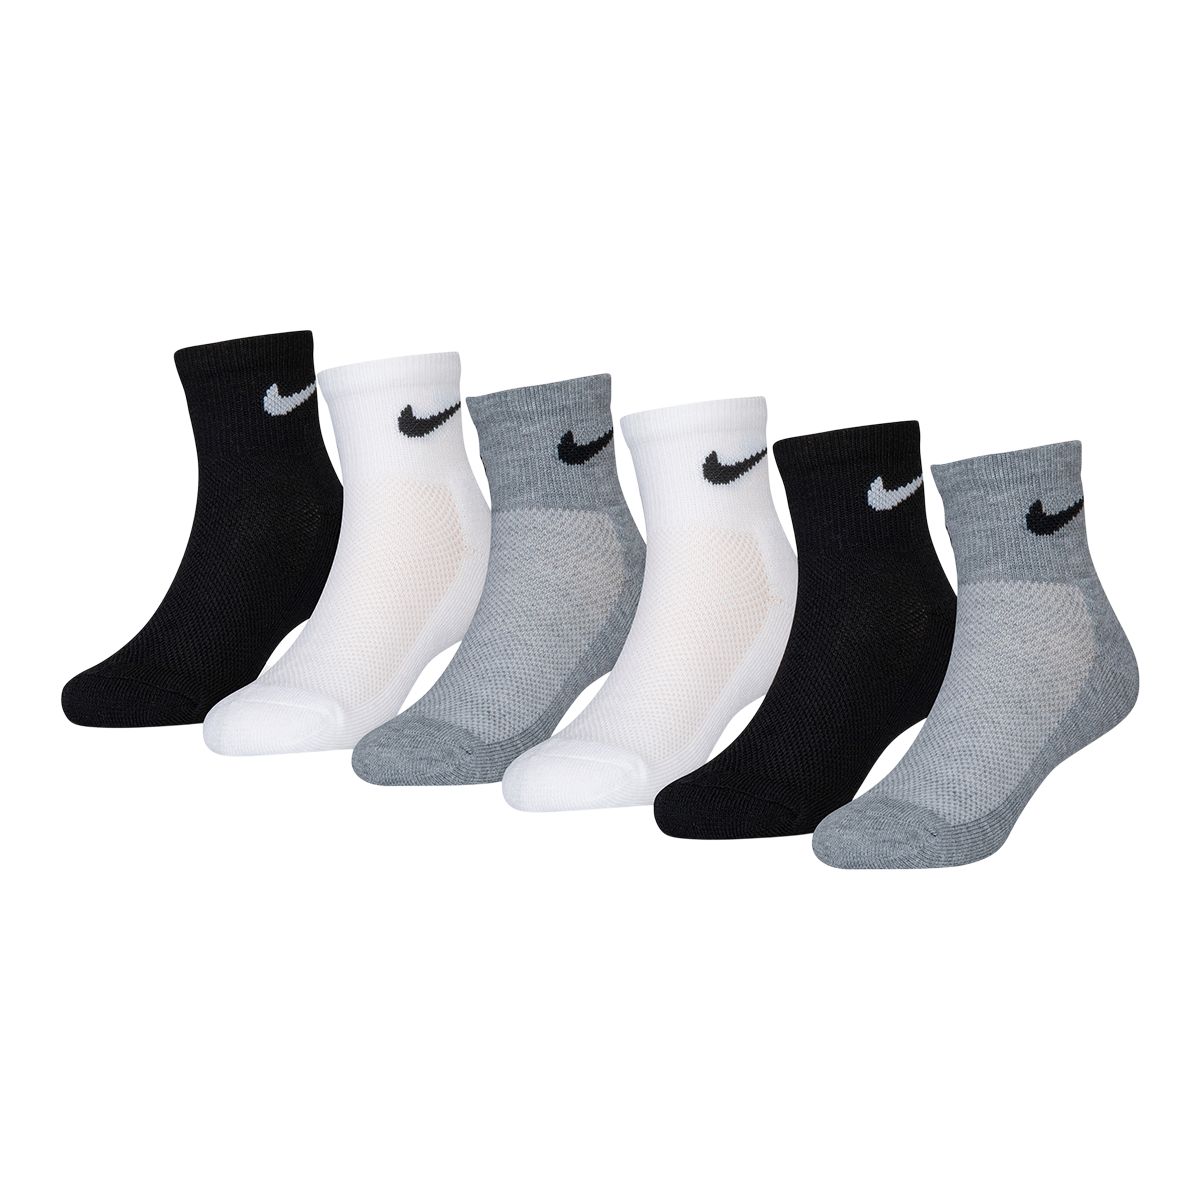 Nike Youth Swoosh Quarter Socks - 6 Pack | SportChek